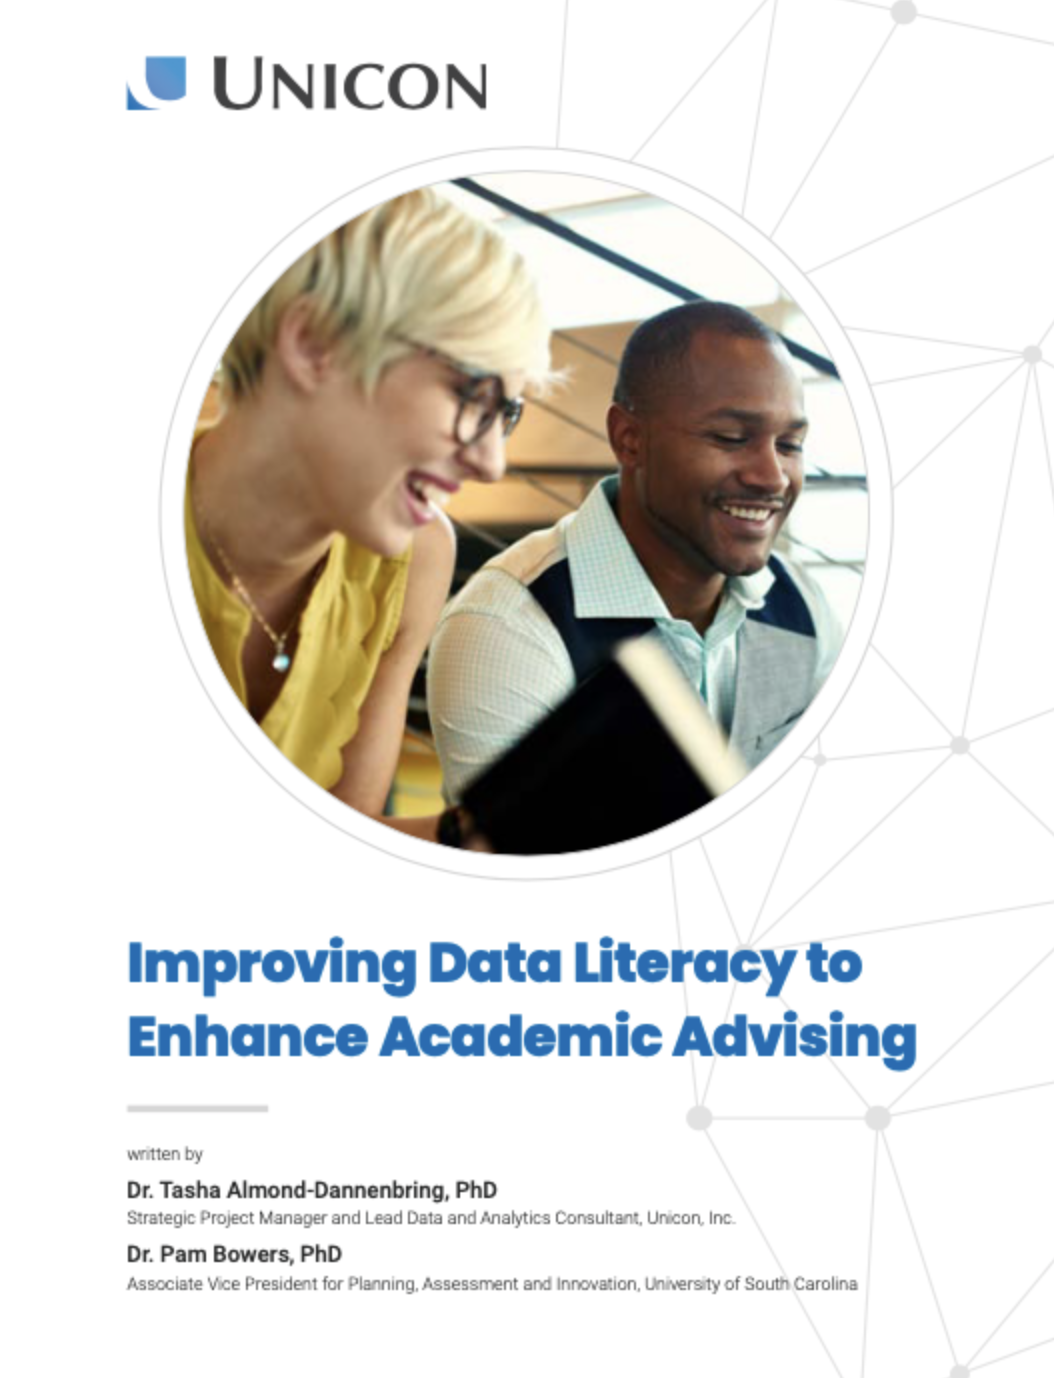 Improving Data Literacy to Enhance Academic Advising